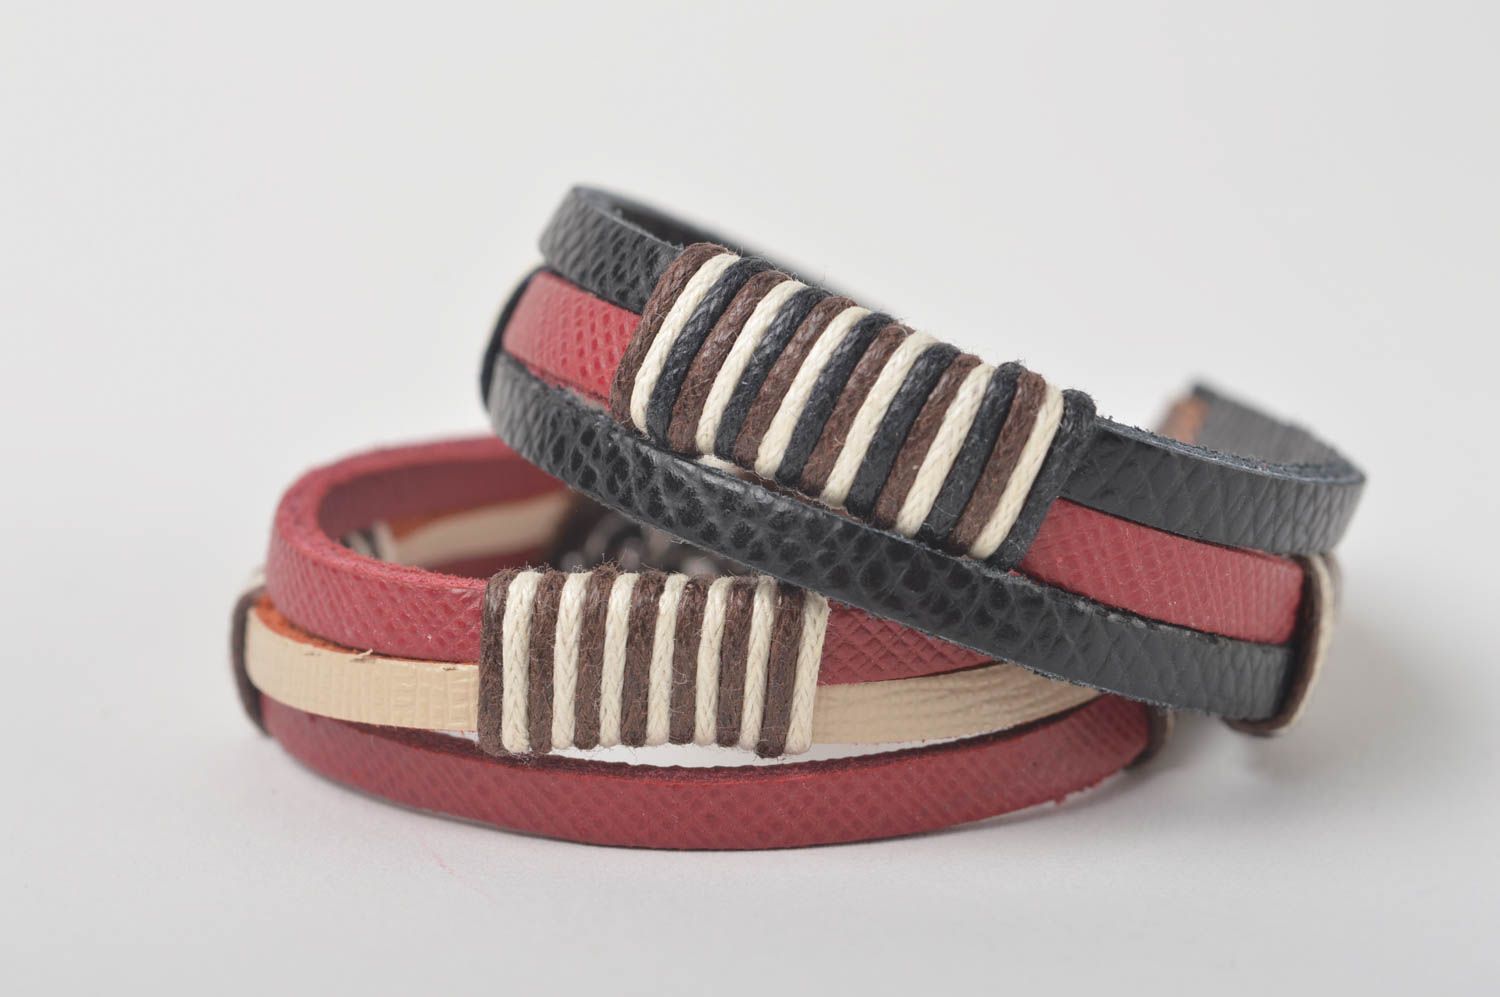 Beautiful handmade leather bracelet designs leather goods fashion trends photo 4